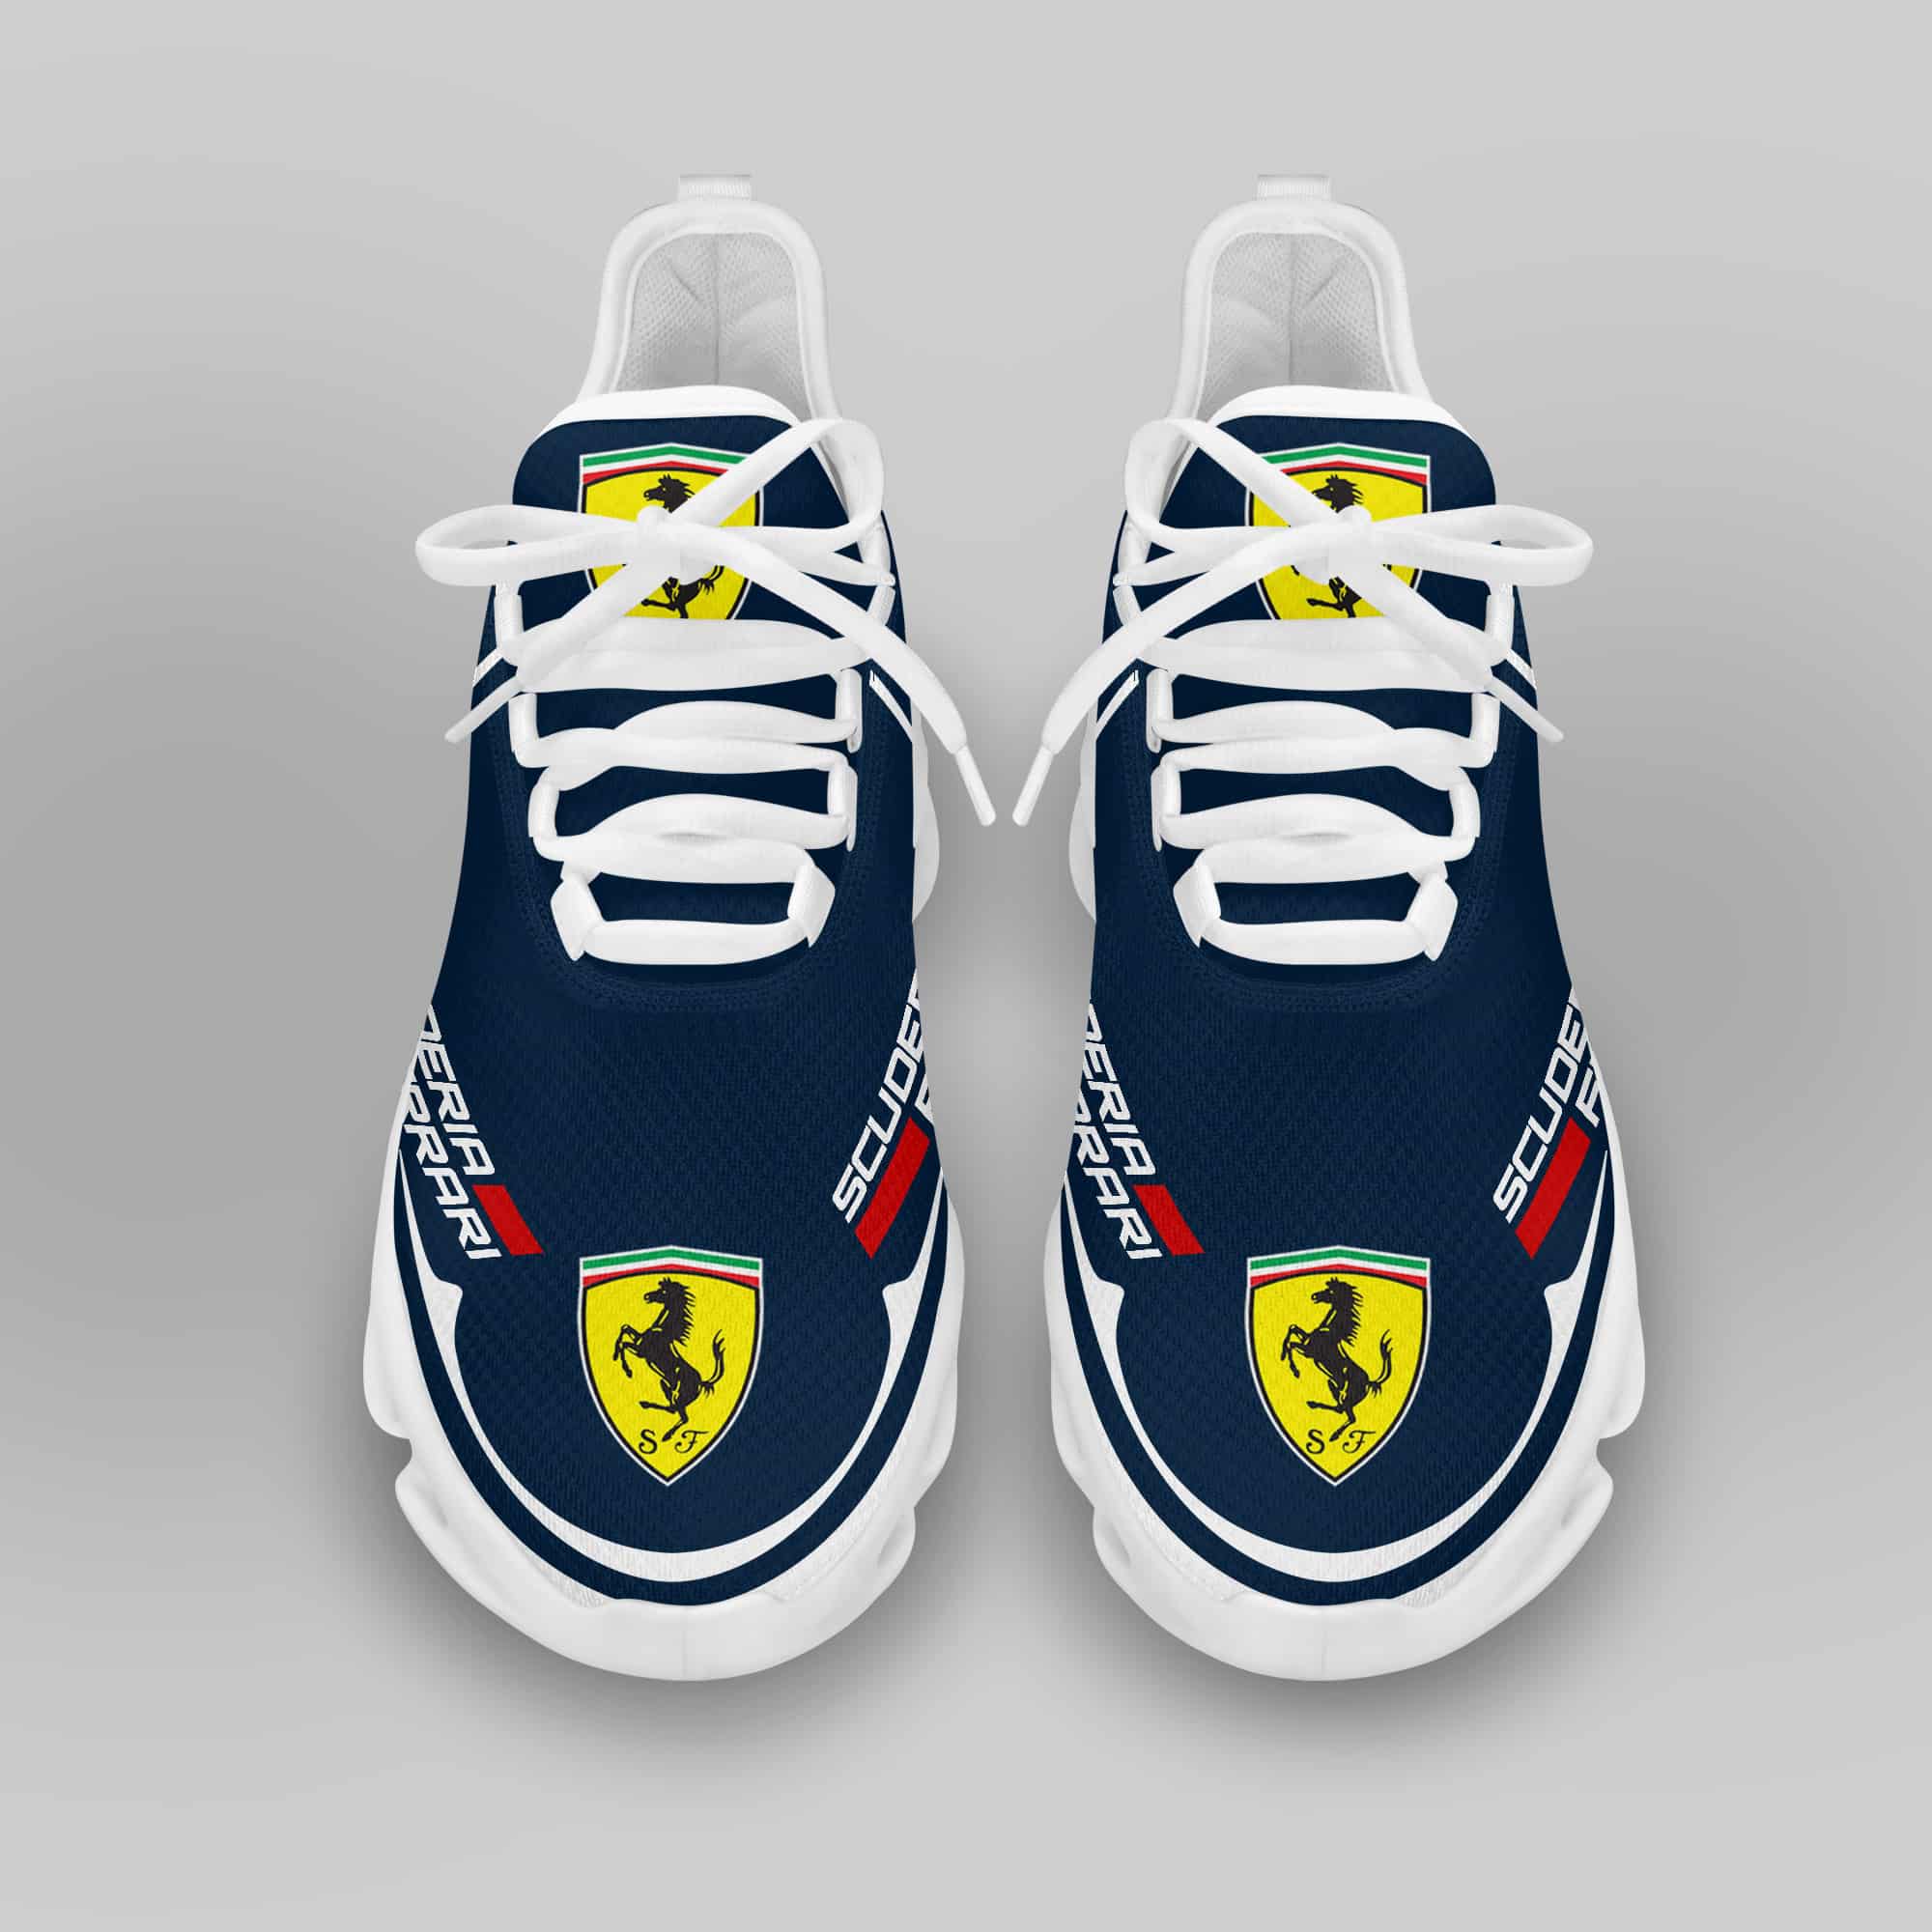 Ferrari Sneaker Running Shoes Max Soul Shoes Sneakers Ver 28 3